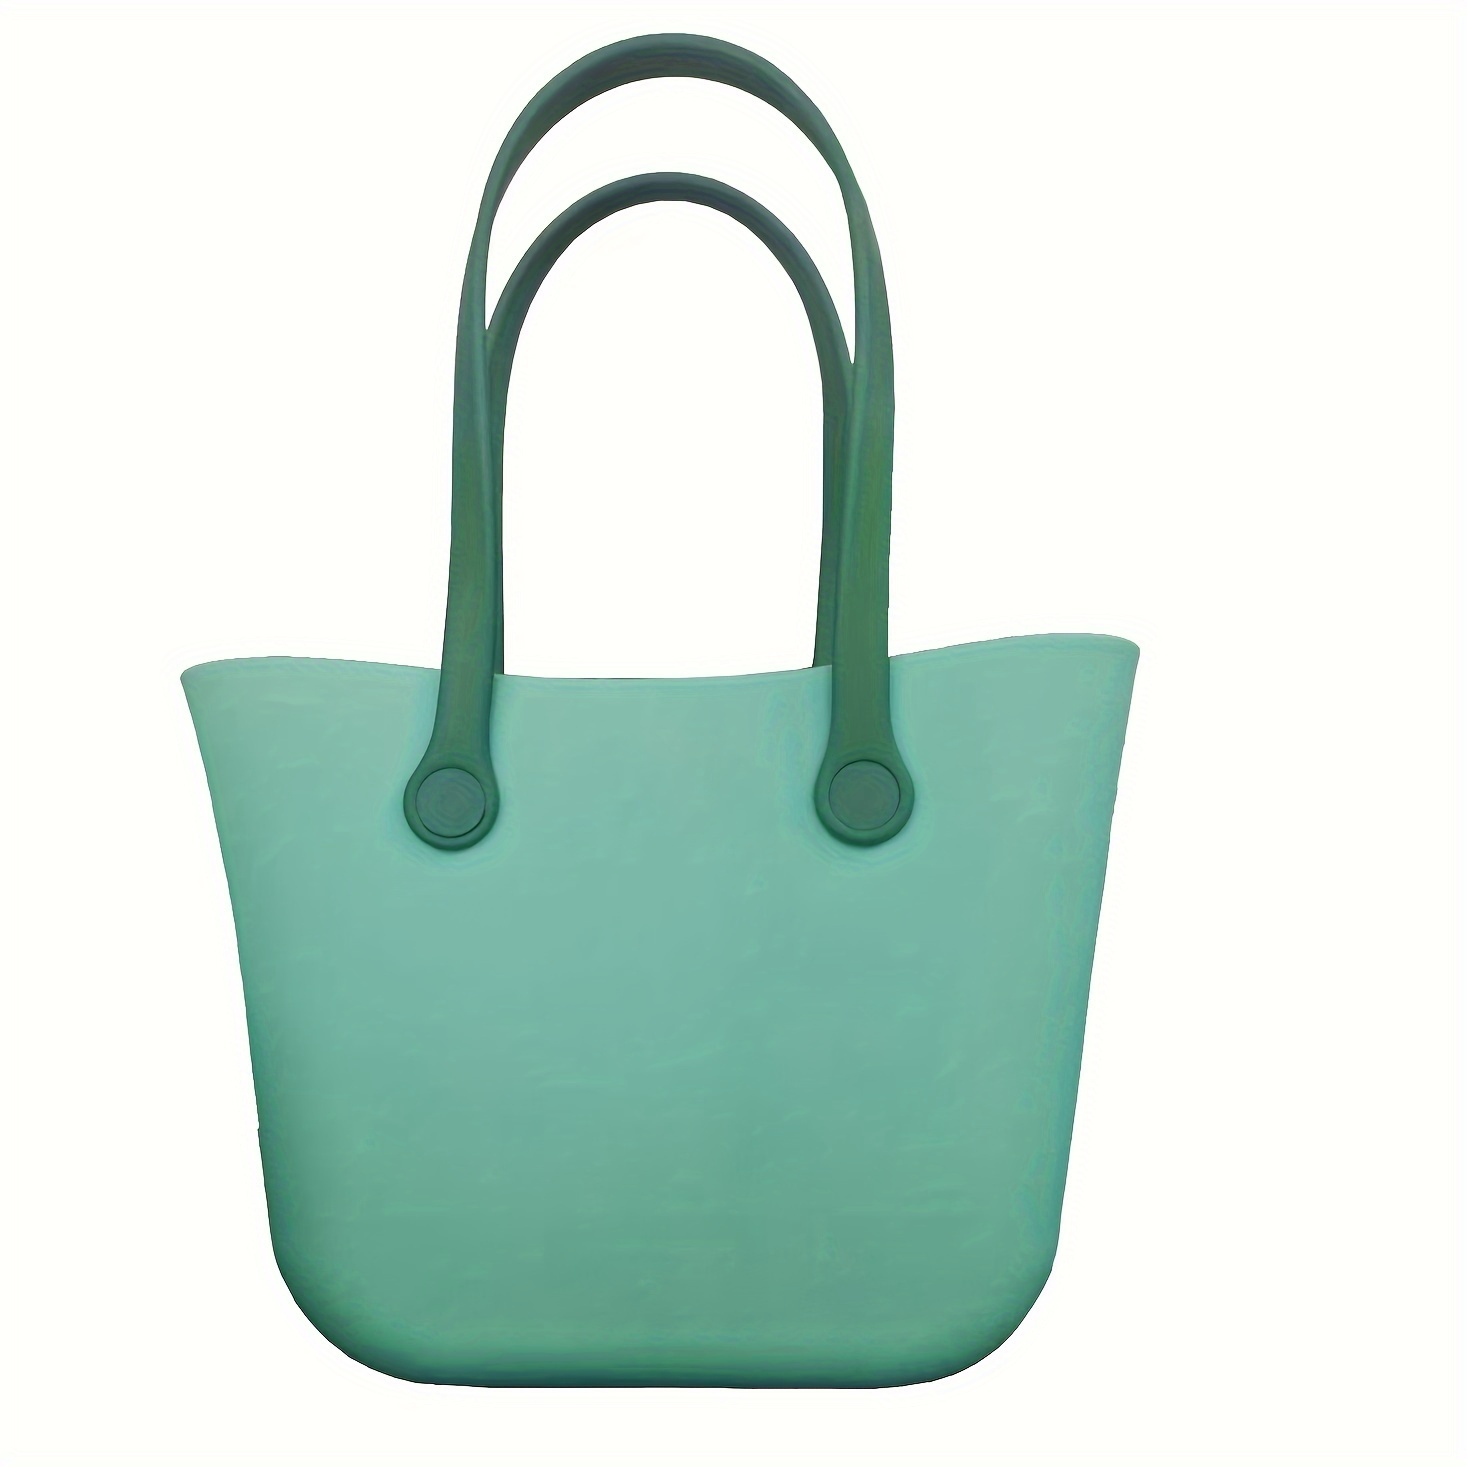 Bag Organizer for Chanel Deauville Tote Small (Organizer Type B) - Seafoam Green